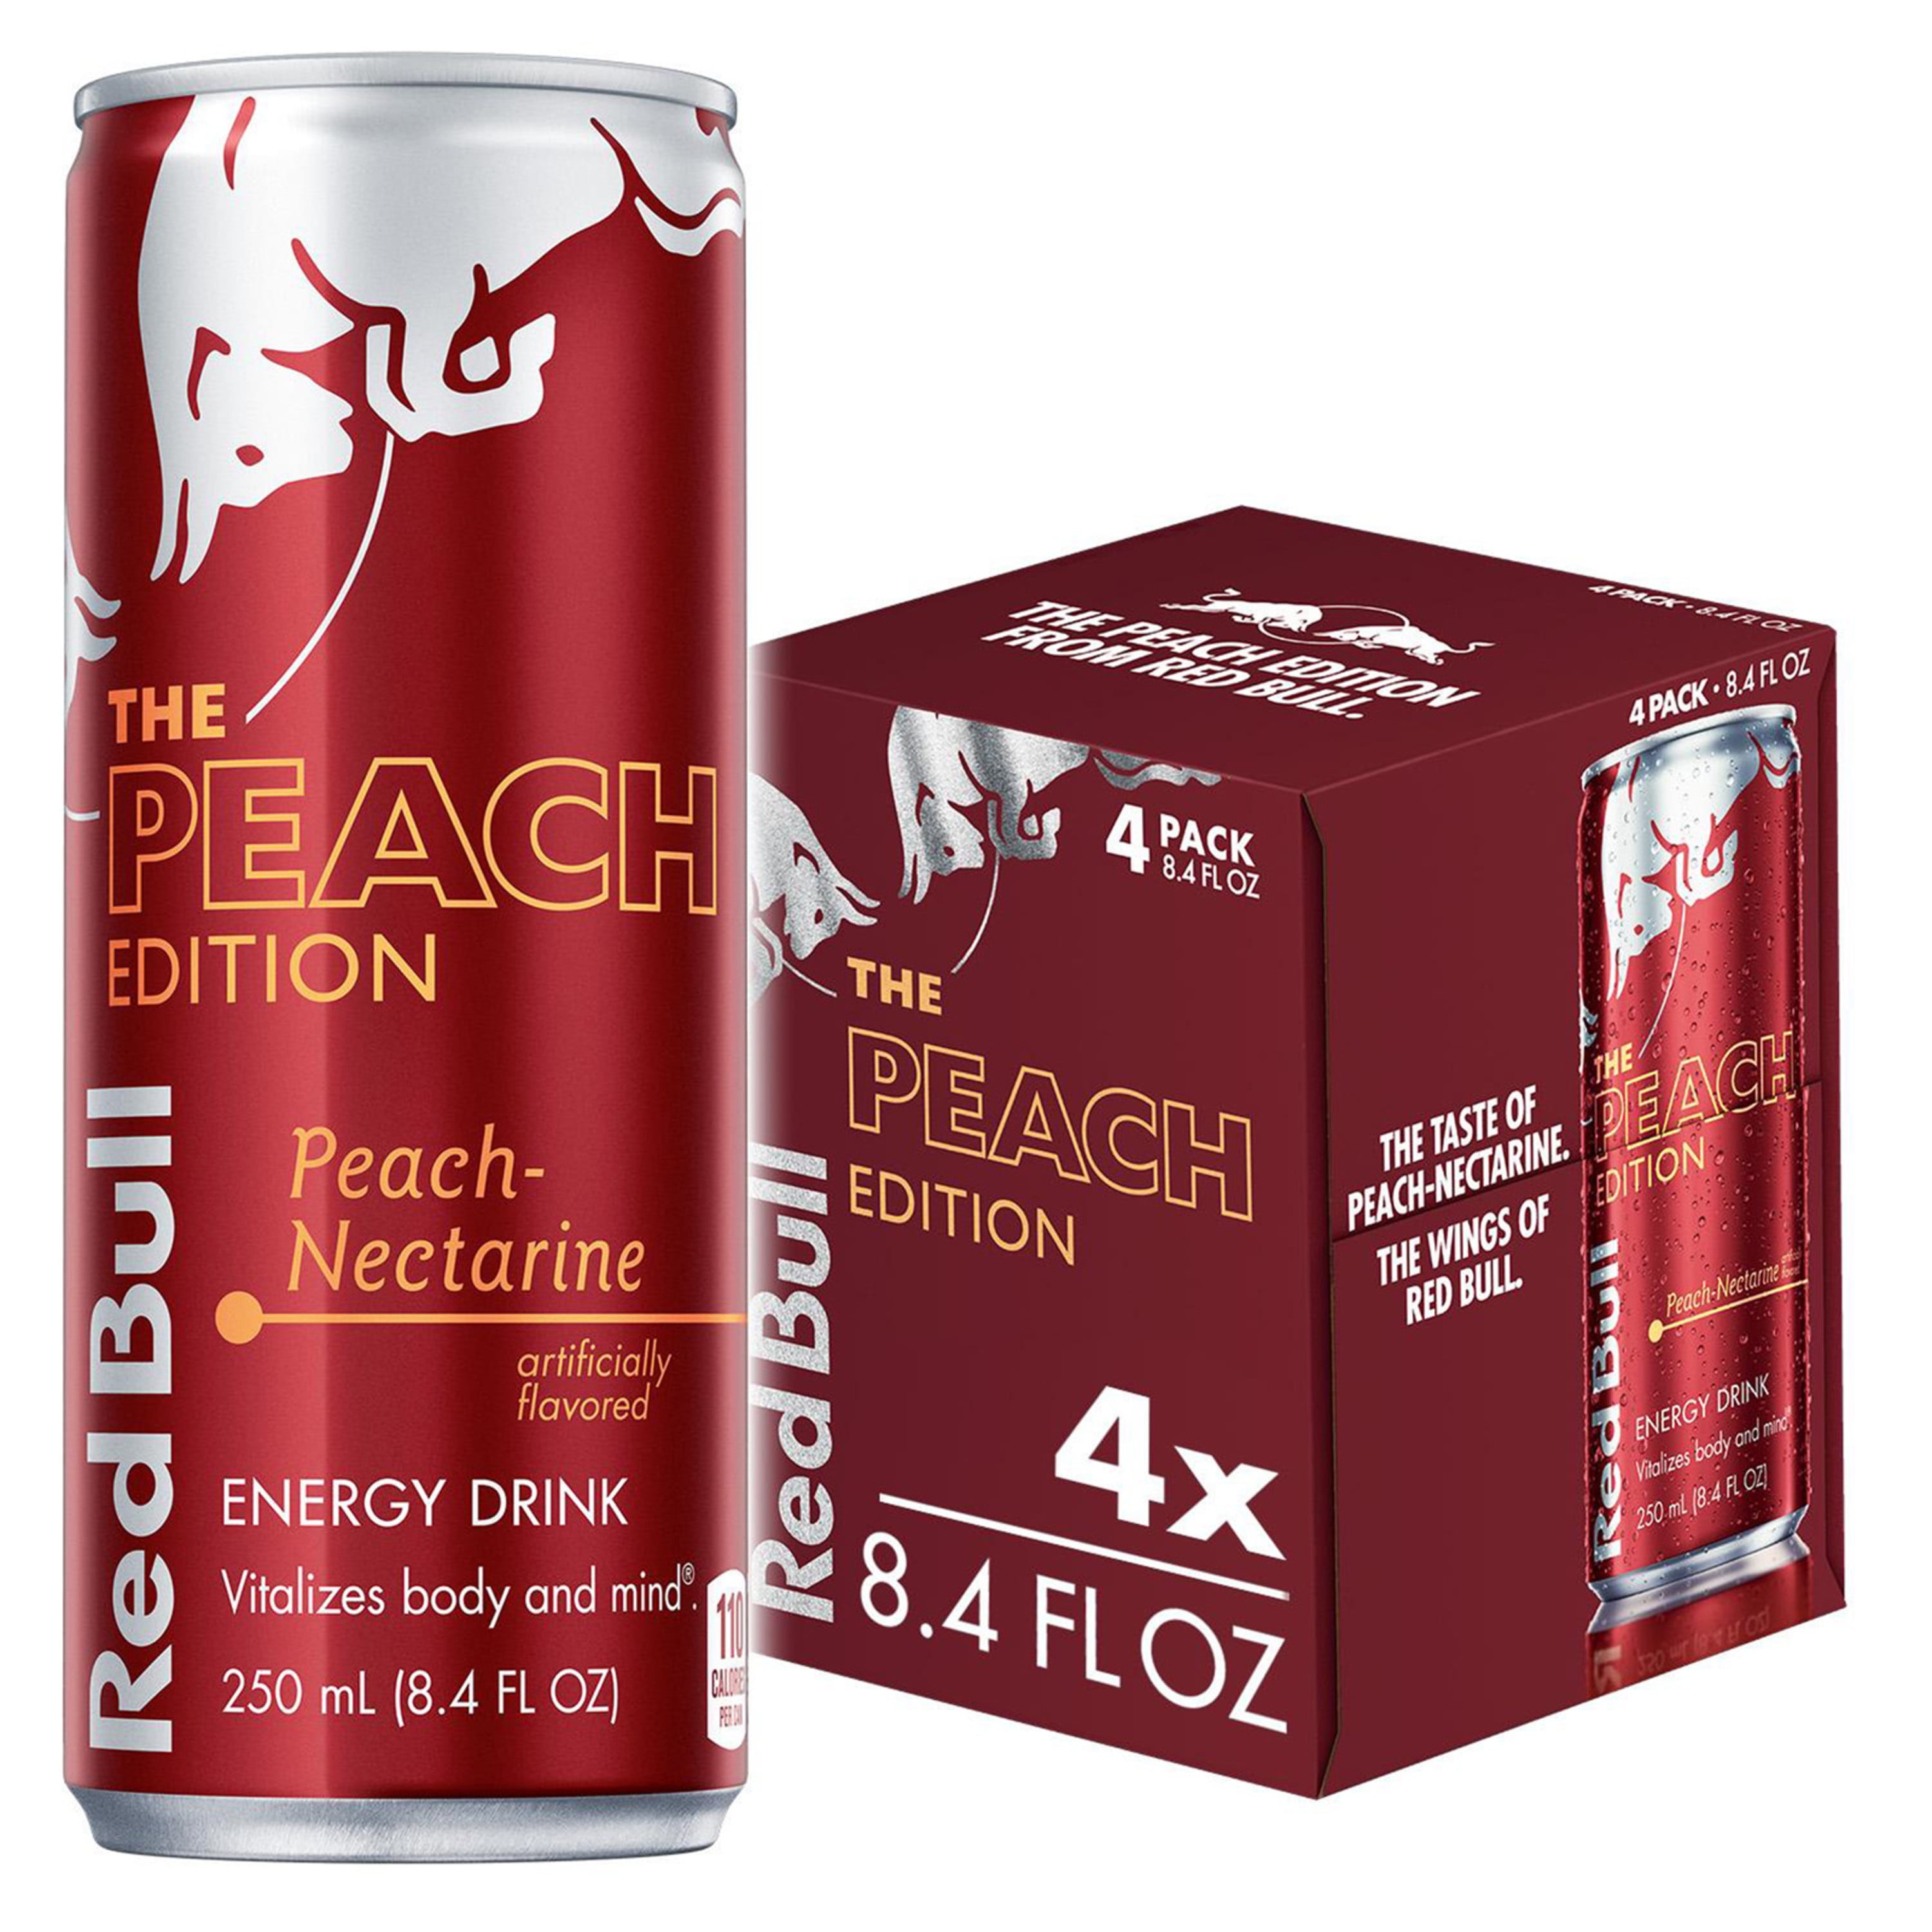 Red Energy Drink, The Peach Edition, Peach-Nectarine, 8.4 Fl Oz pack) -